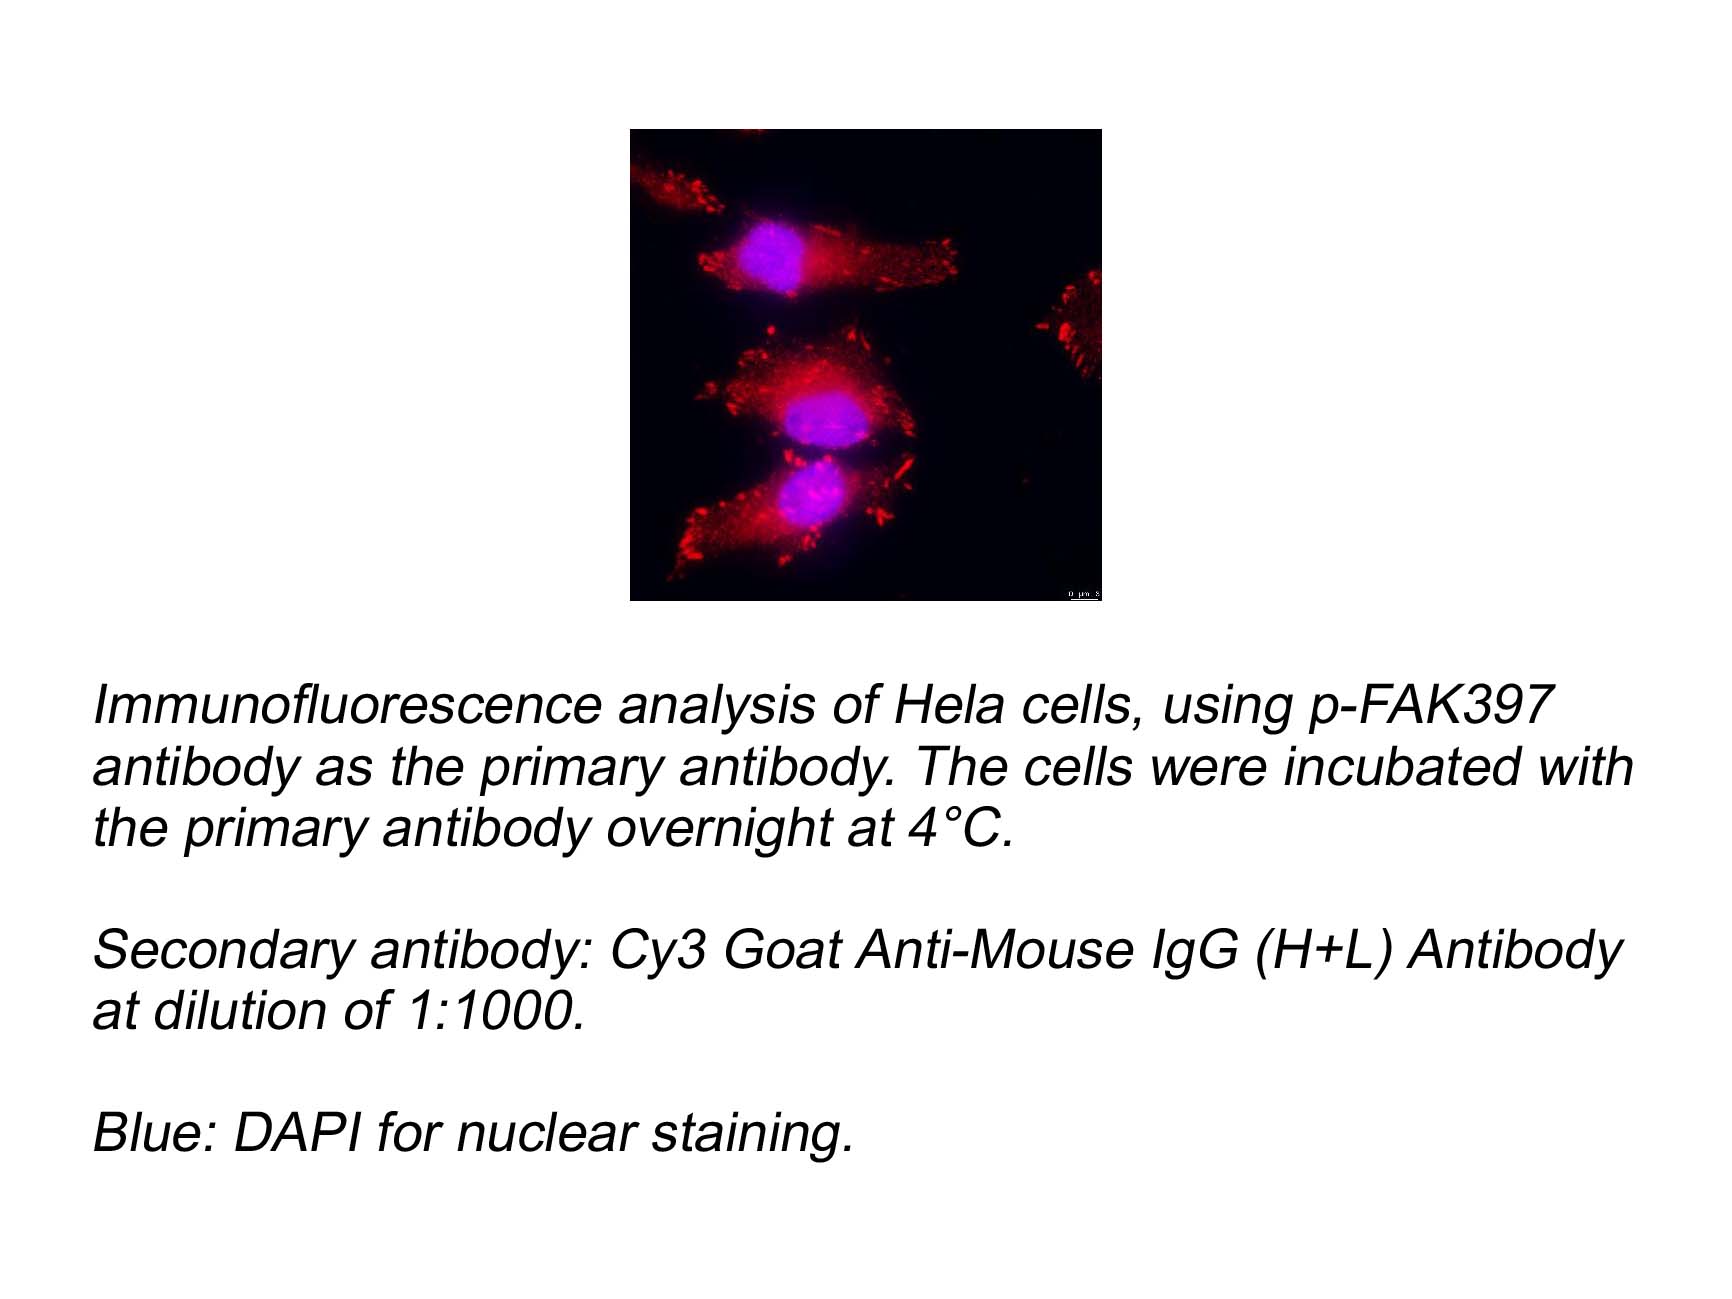 Cy3 Goat Anti-Mouse IgG (H+L) Antibody